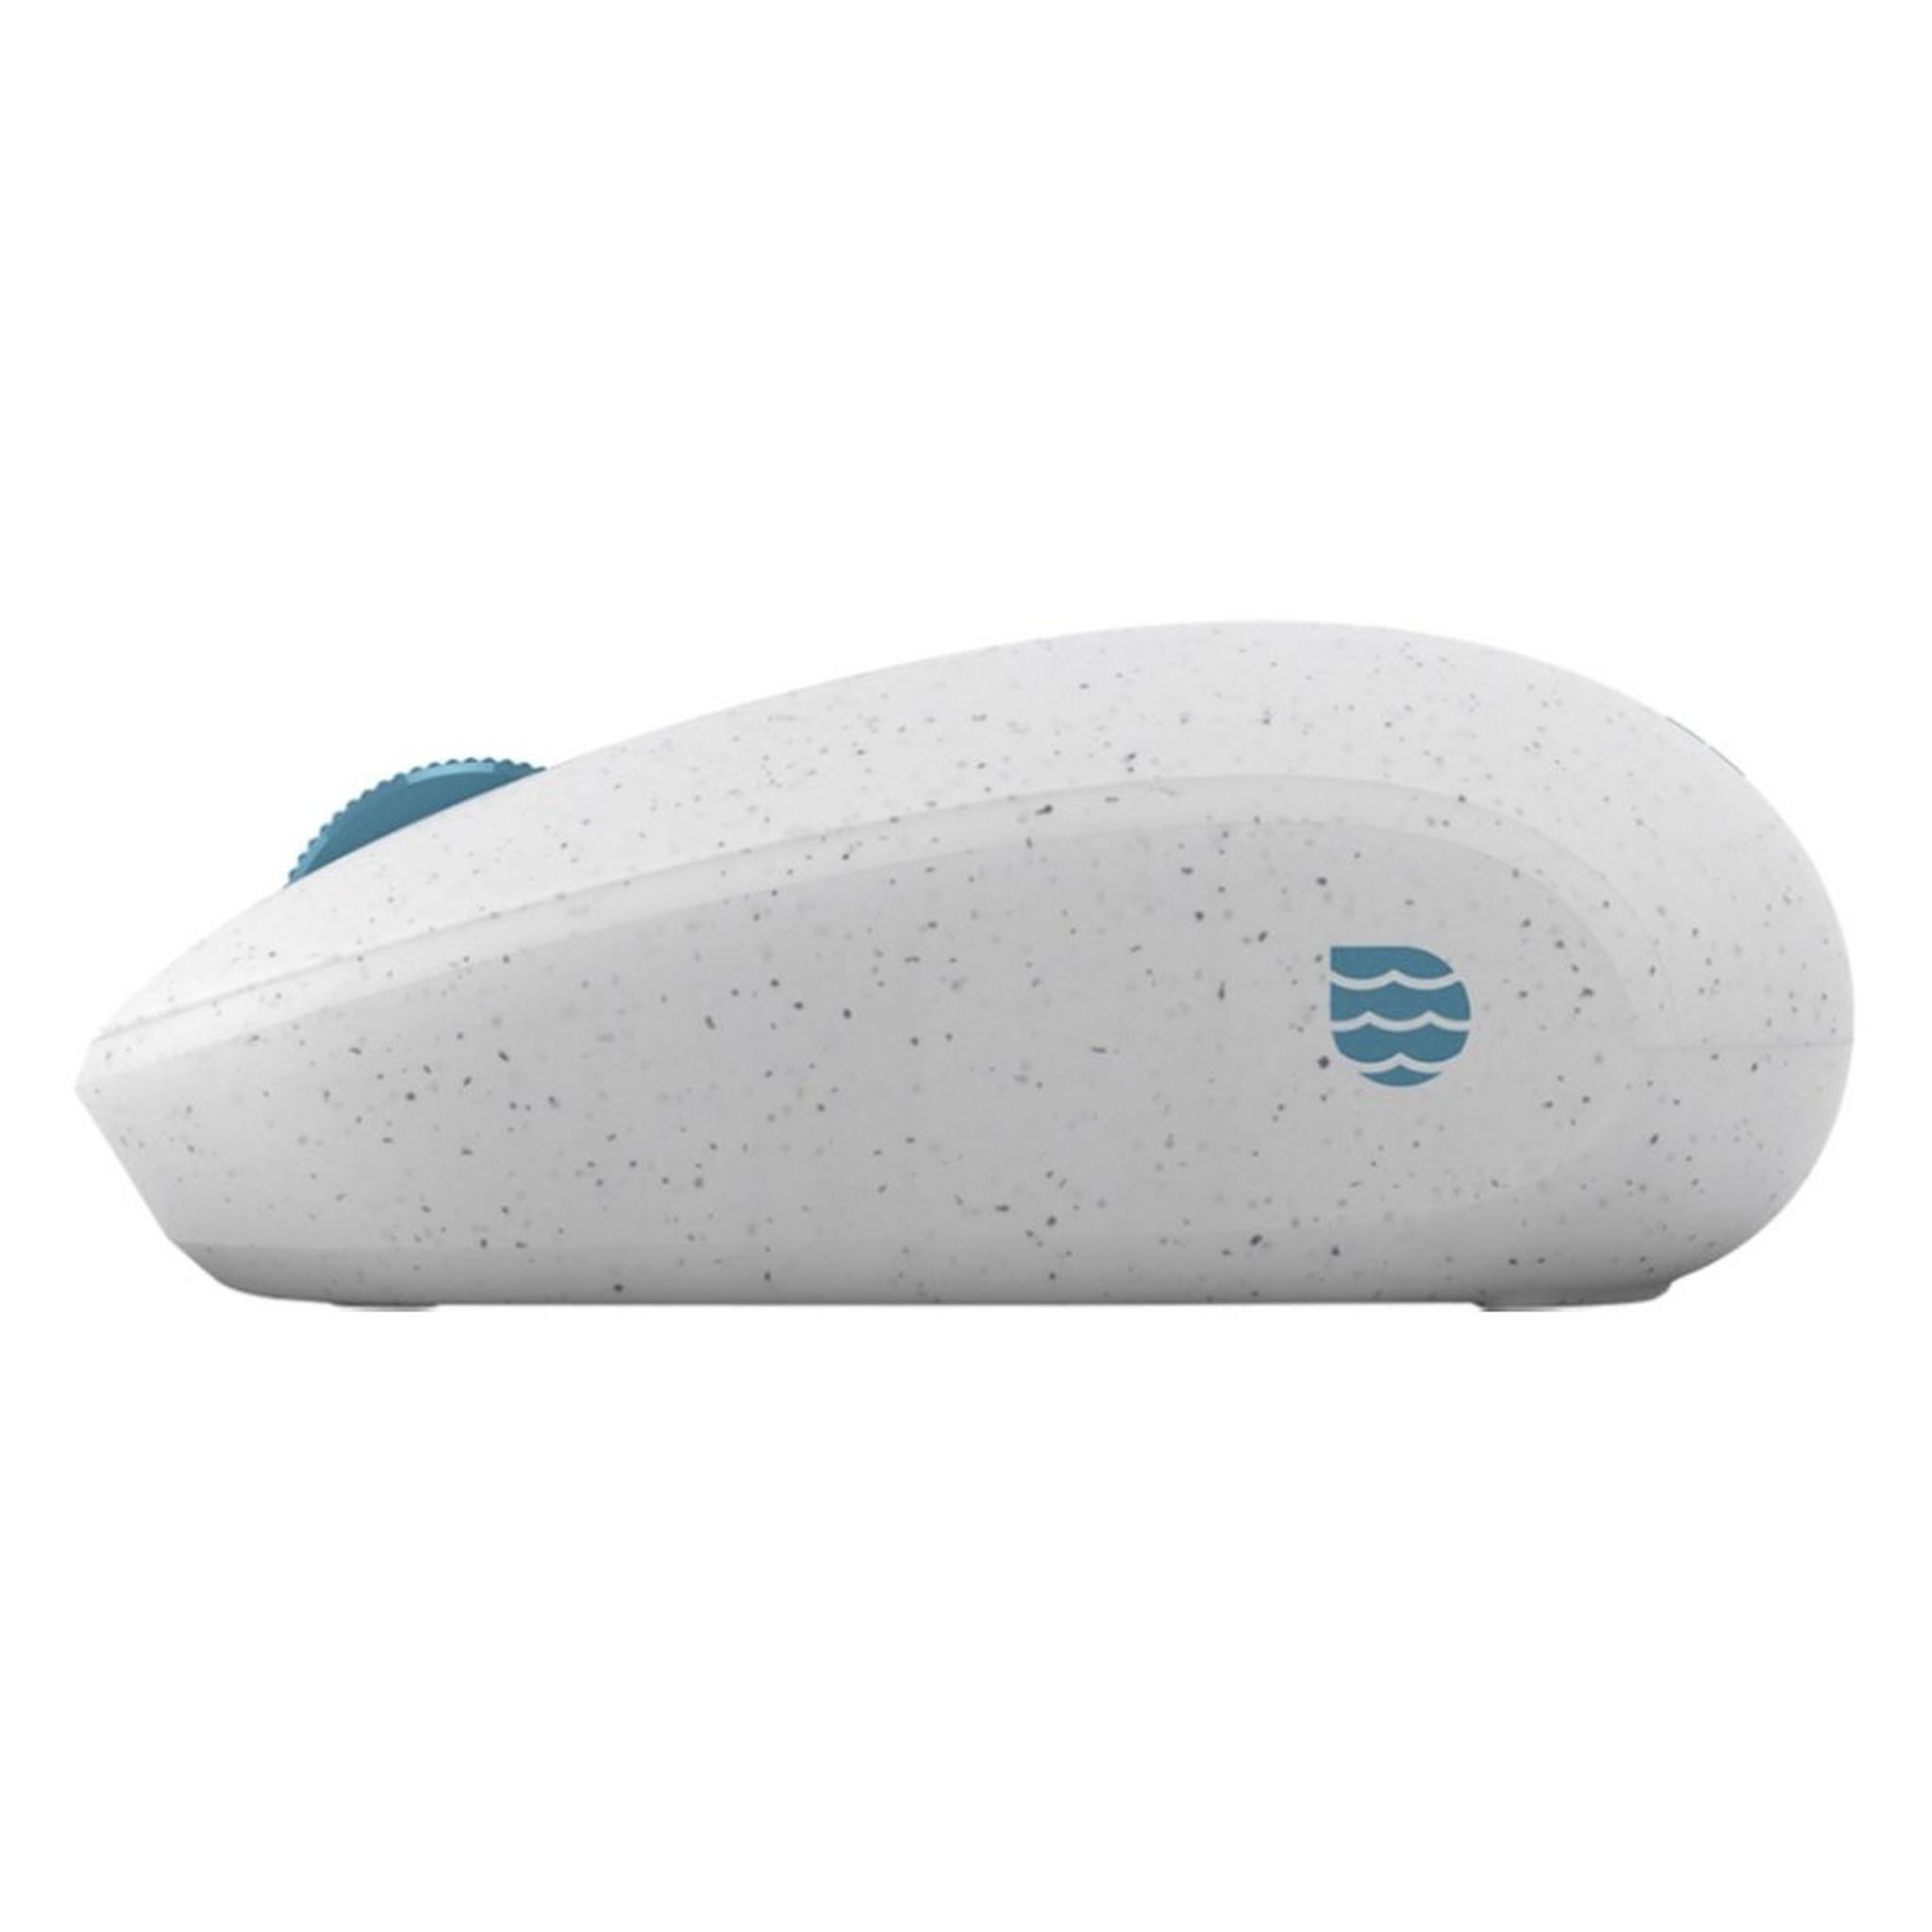 Microsoft Ocean Plastic Bluetooth Mouse